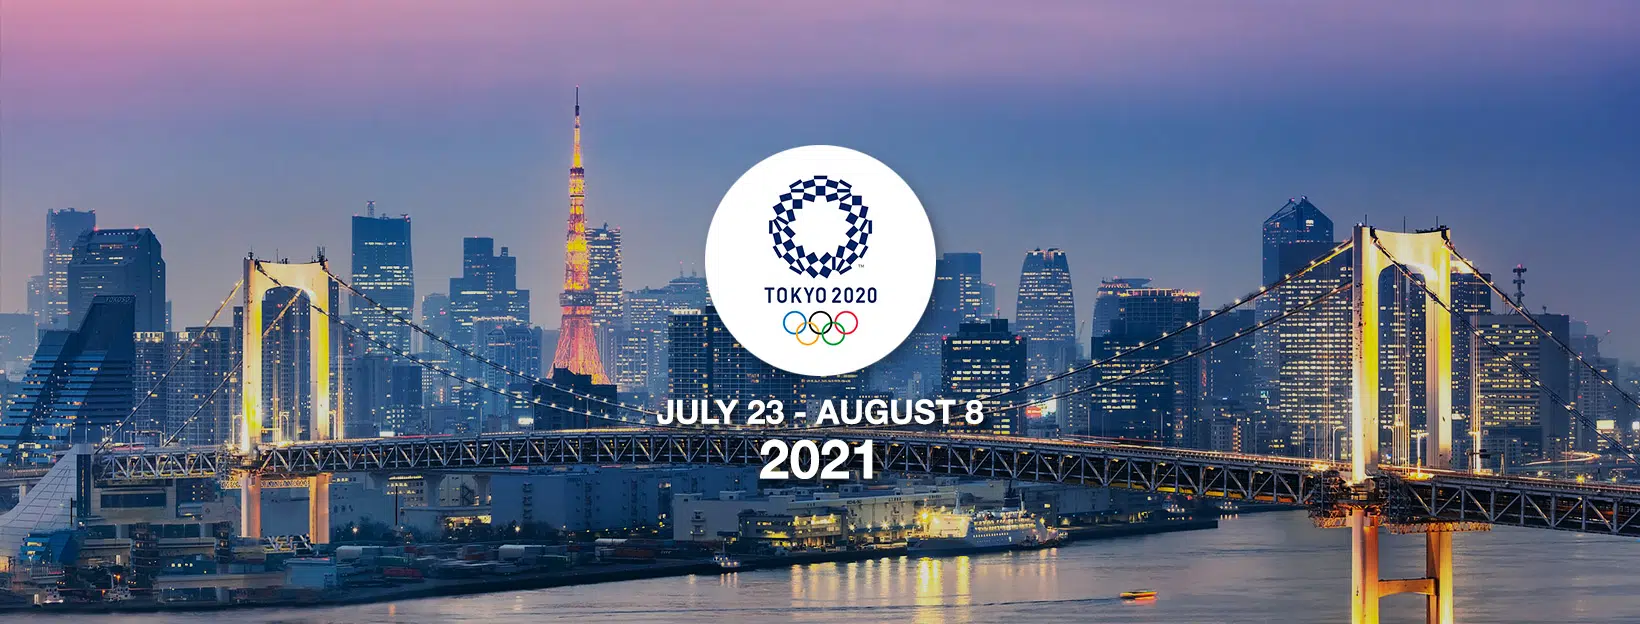 2020 Tokyo Olympics Rescheduled